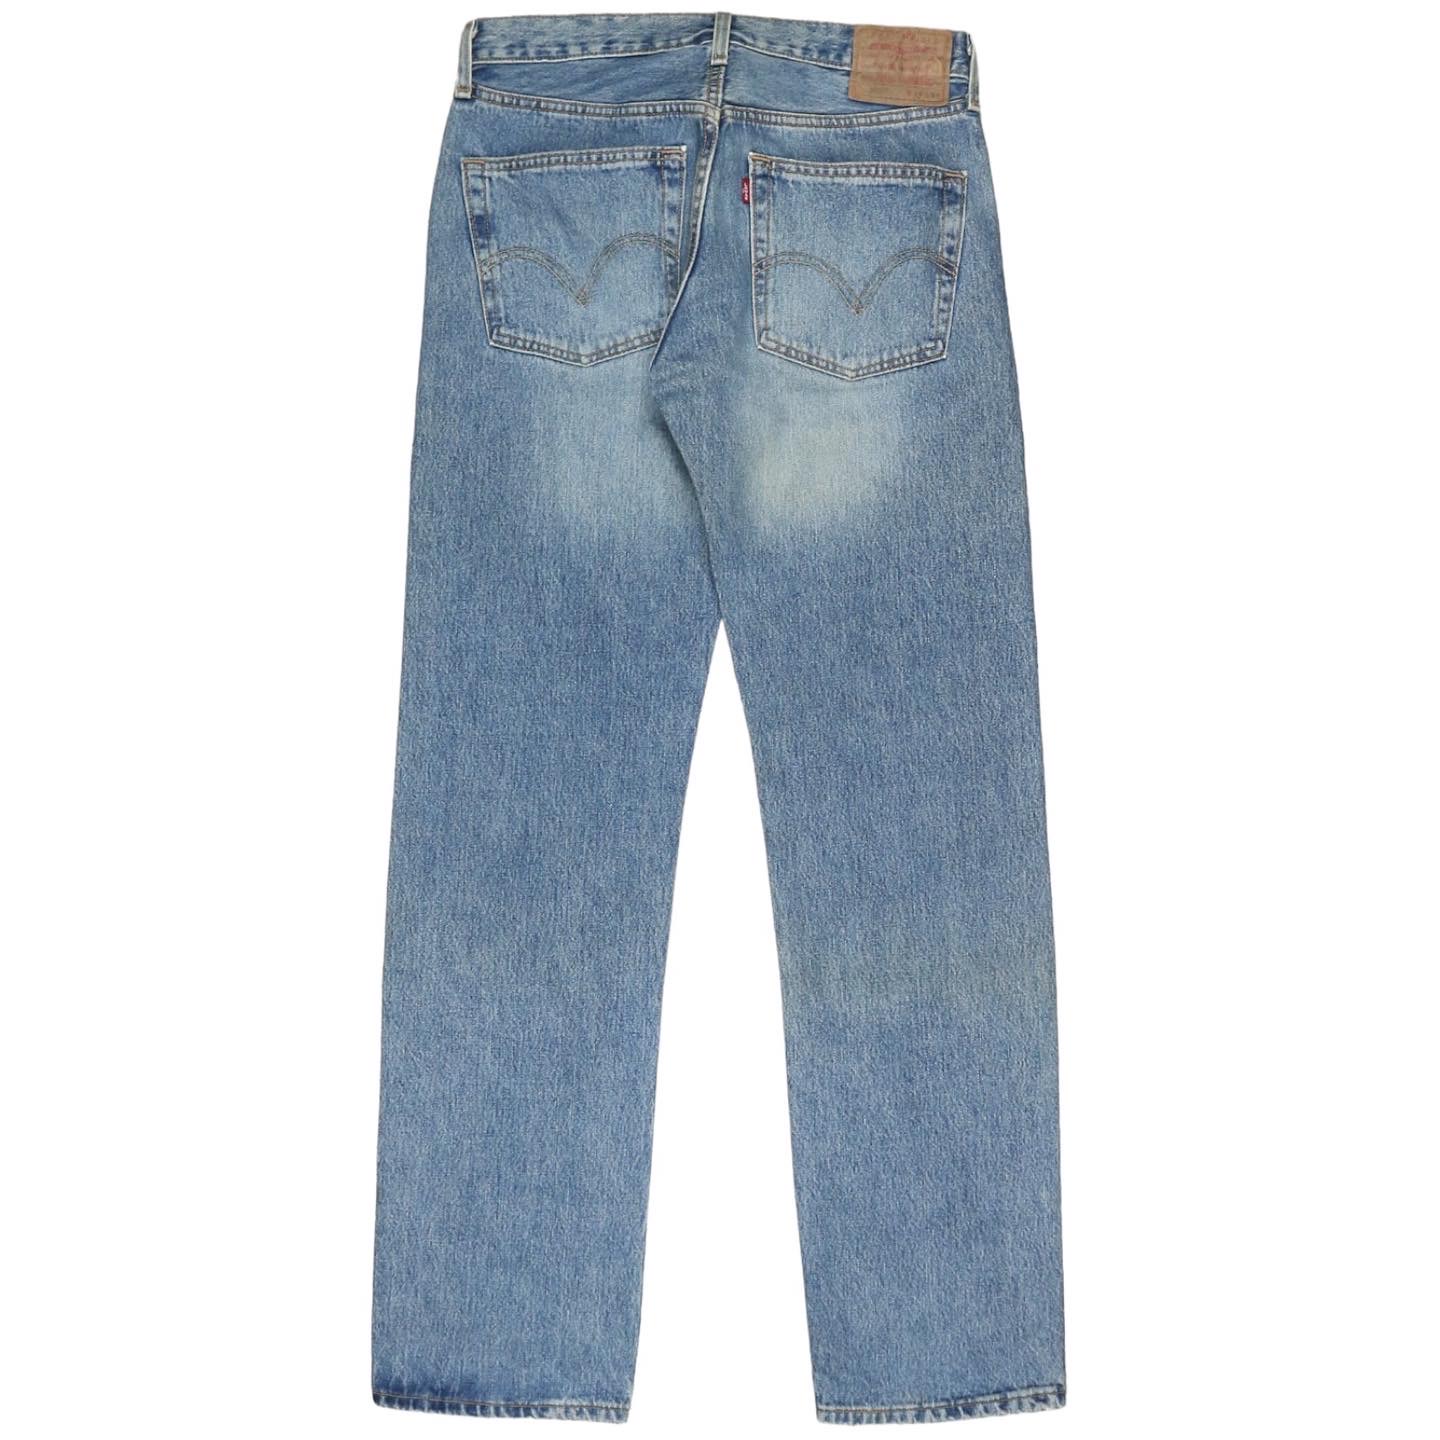 2000s Levi's 501 USA Jeans Size 31